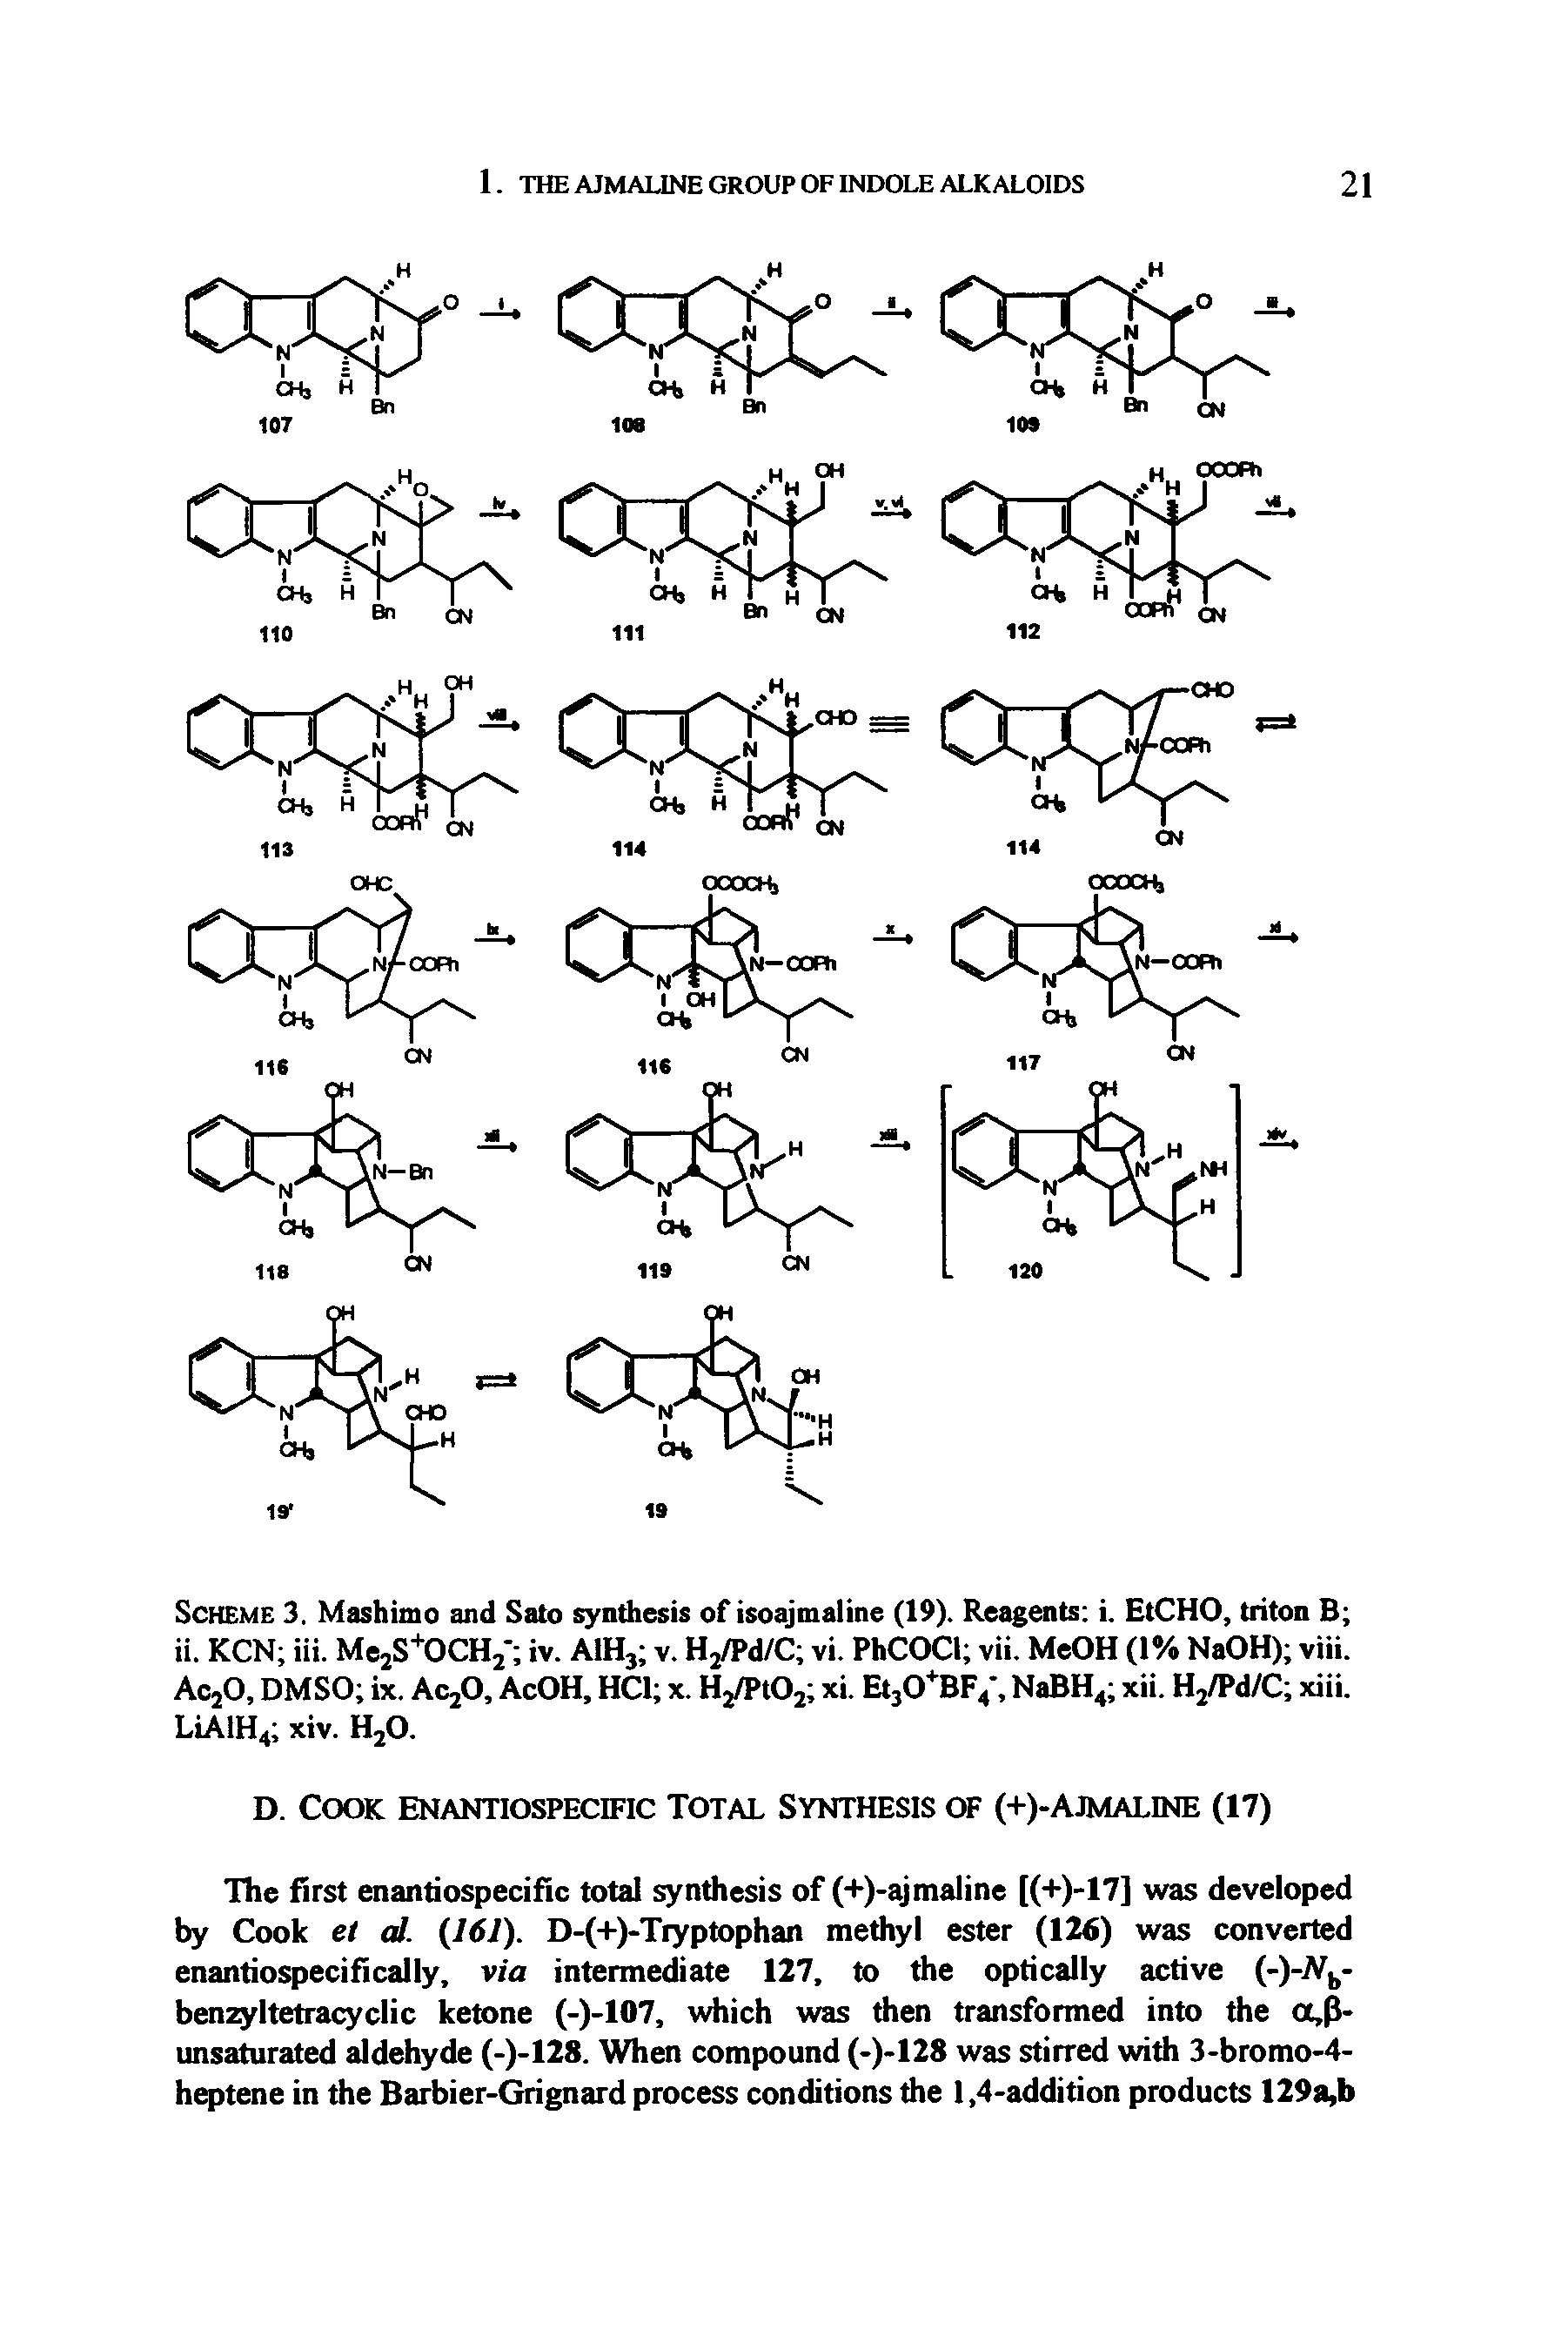 Scheme 3, Mashimo and Sato synthesis of isoajmaline (19). Reagents i. EtCHO, triton B ii. KCN iii. MejS OGHj iv. AlH, v. Hj/Pd/C vi. PhCOCl vii. MeOH (1% NaOH) viii. AC2O, DMSO ix. AcjO, AcOH, HCl x. Hj/PtOj xi. Et30 Bp4 , NaBH4 xii. Hj/Pd/C xiii. LiAlH4 xiv. HjO.